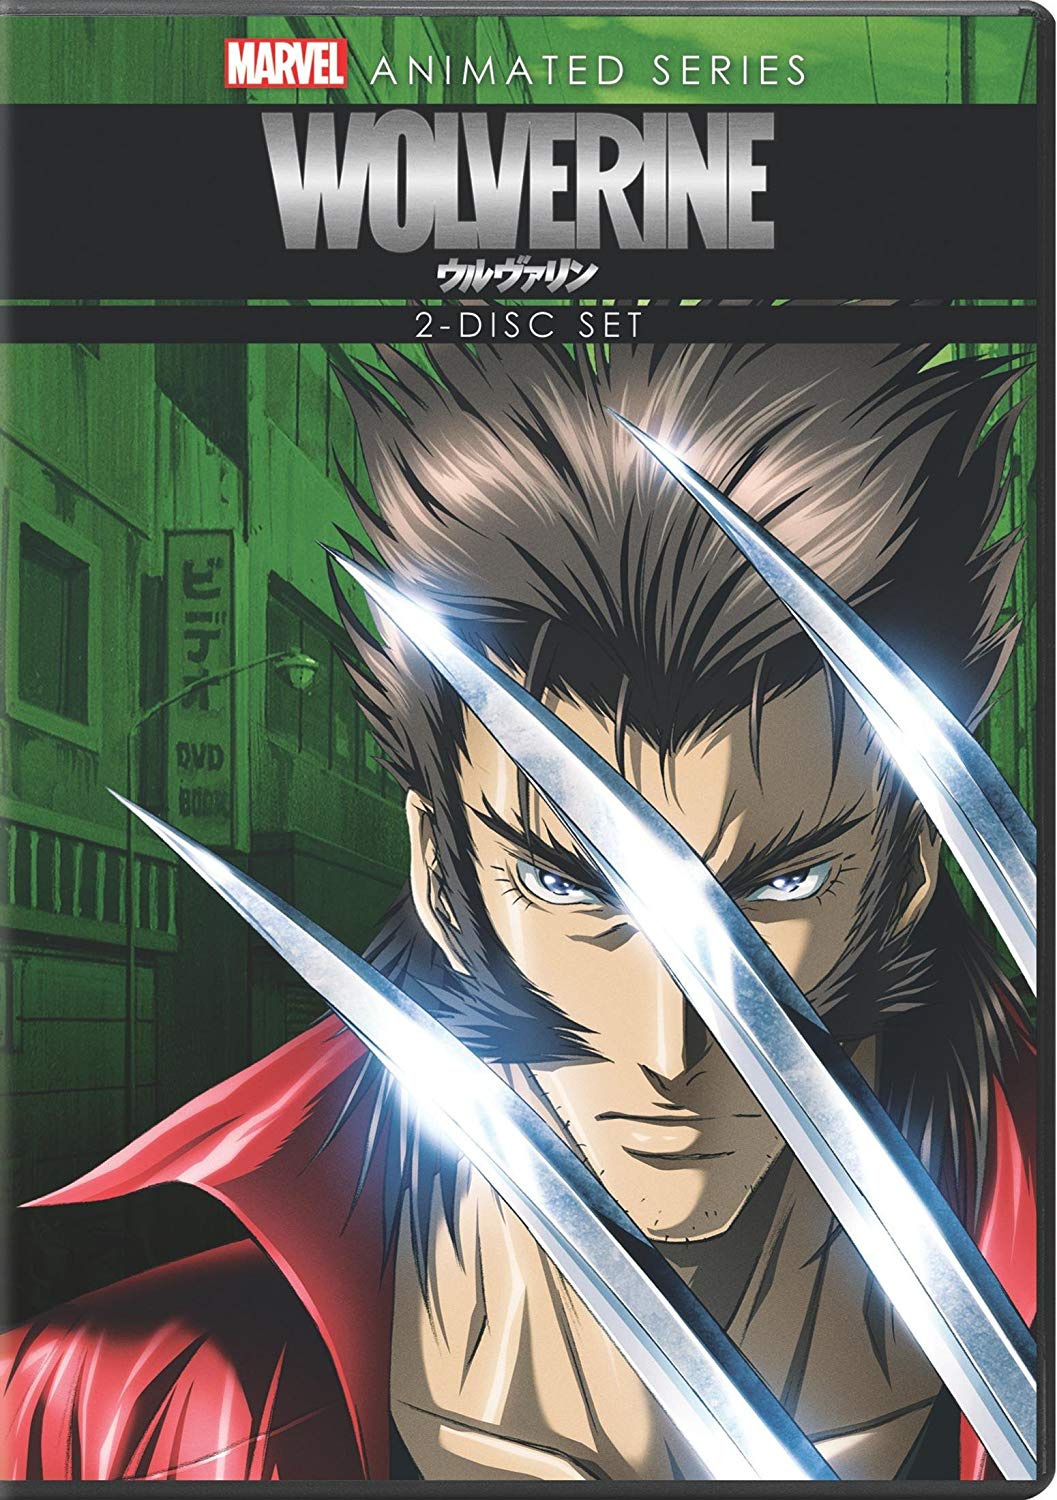 Wolverine - 2011 Anime - Animated Series - DVD